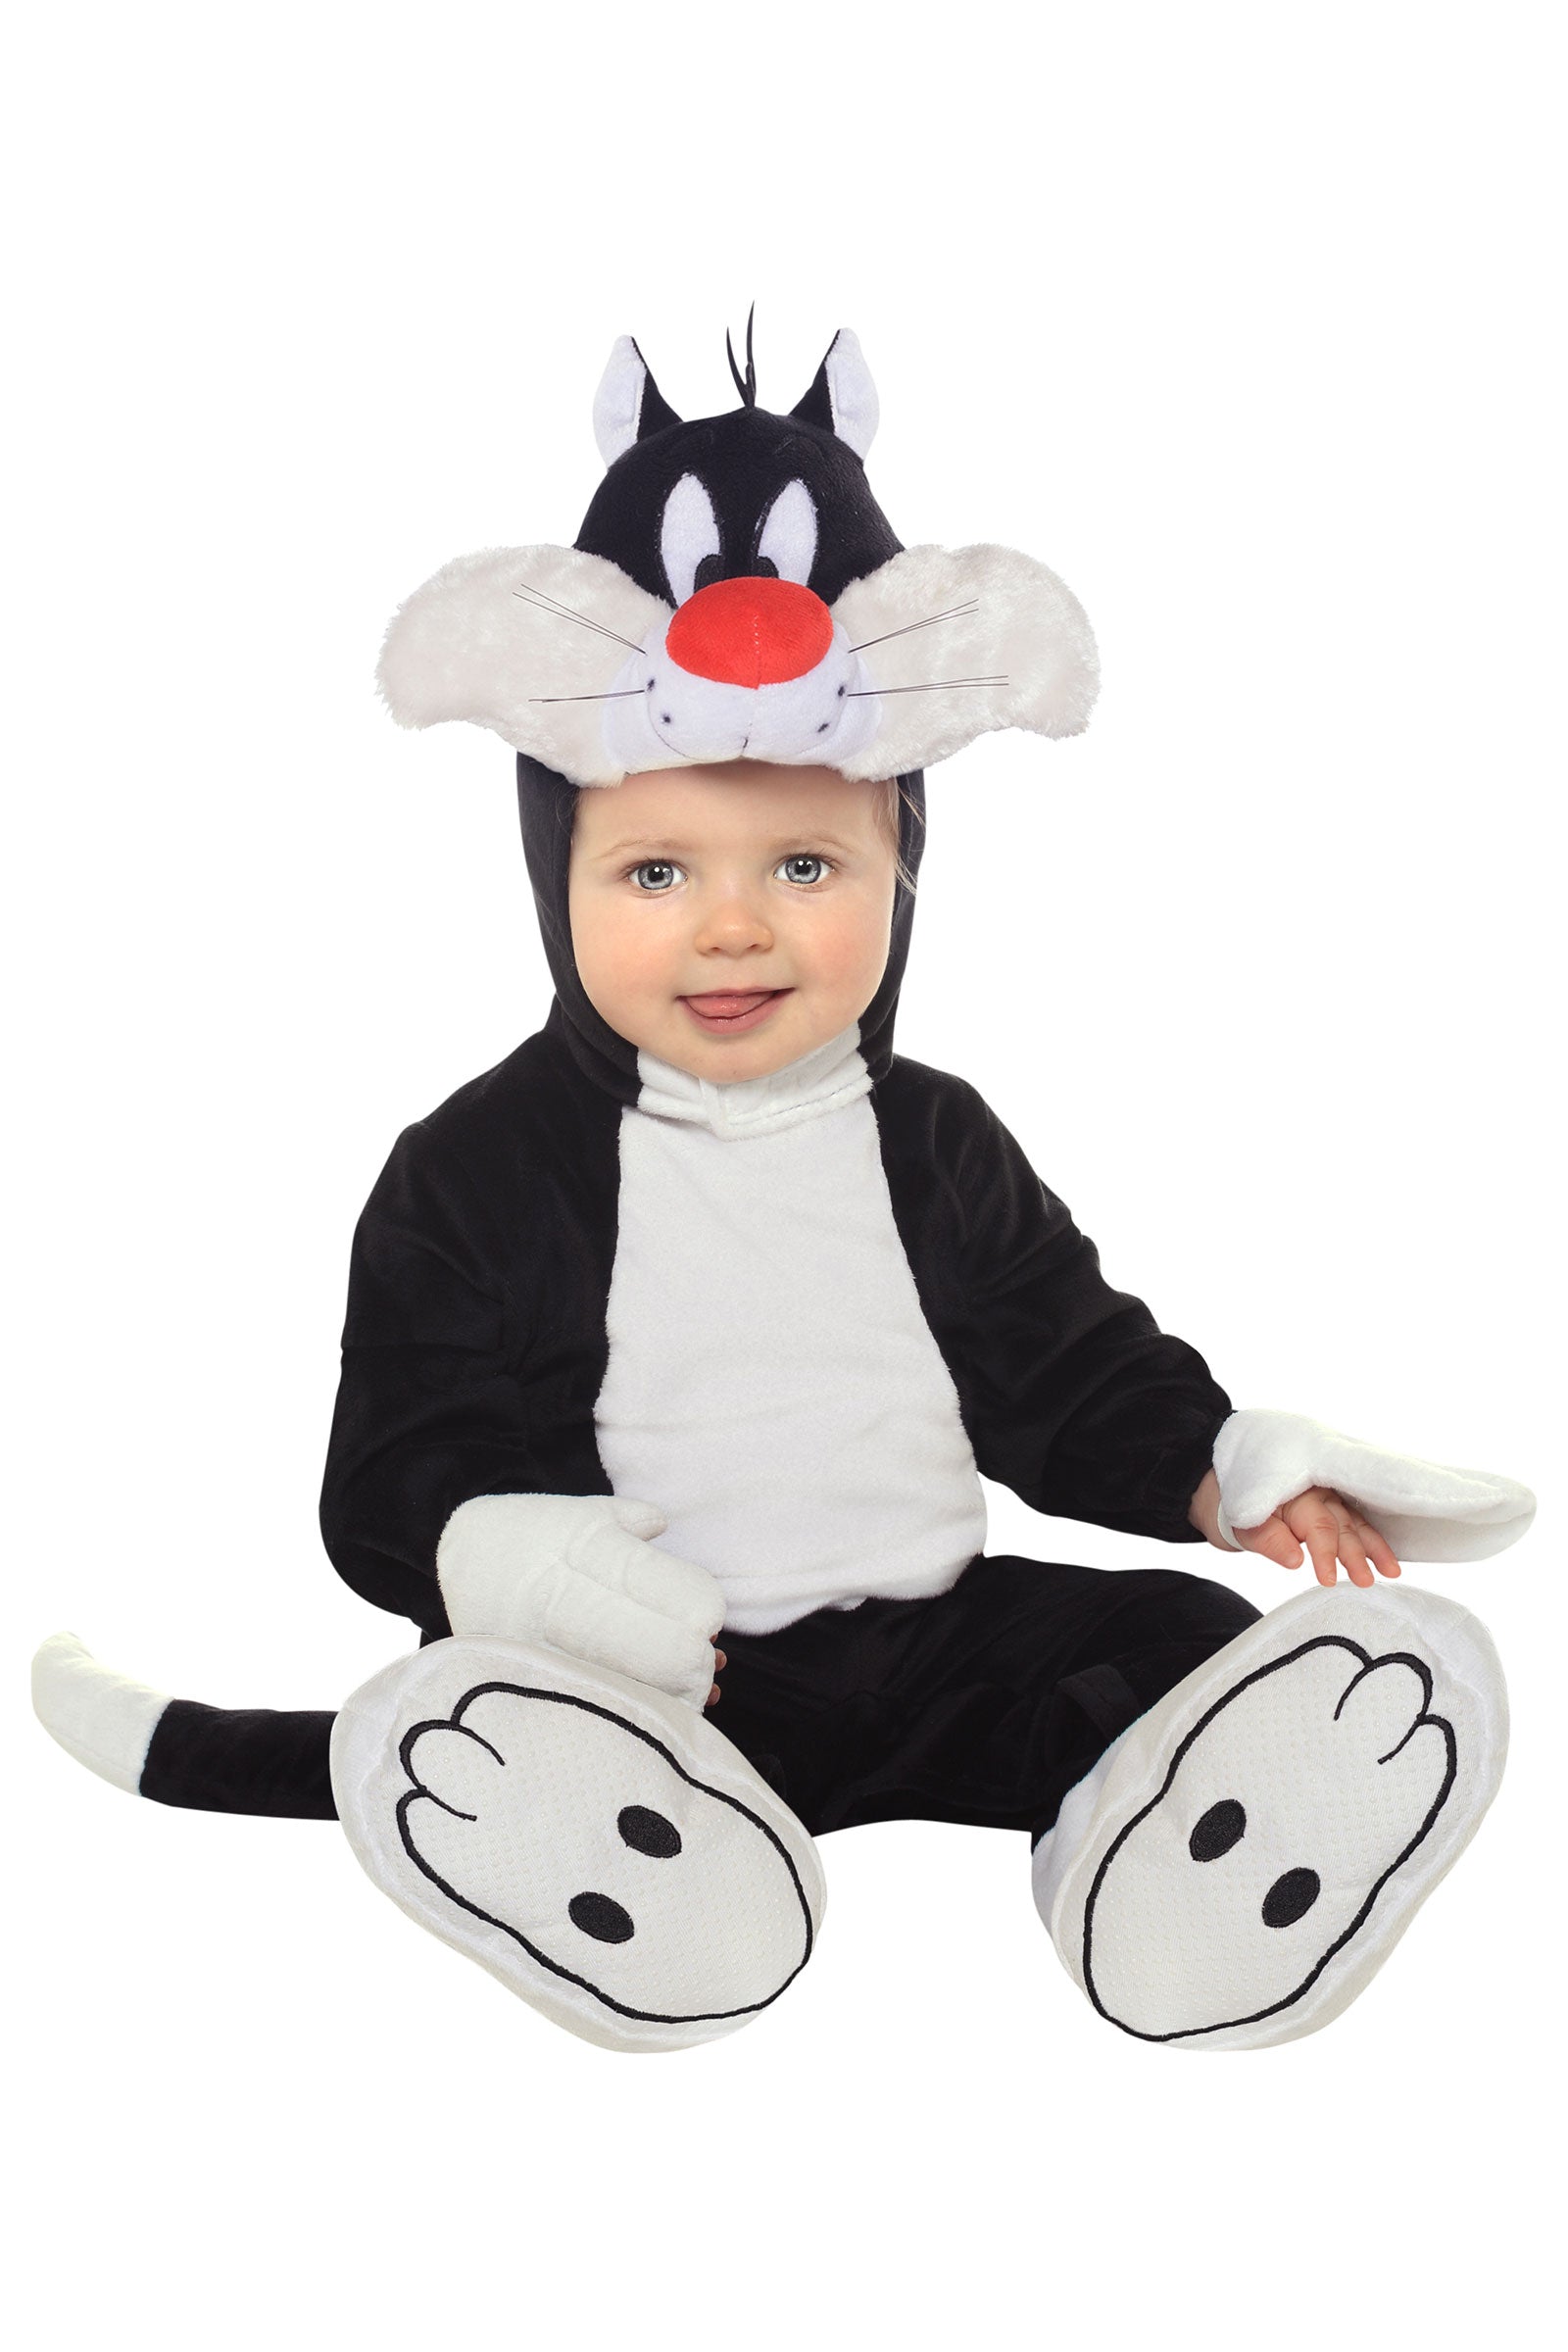 Sylvester Infant Costume